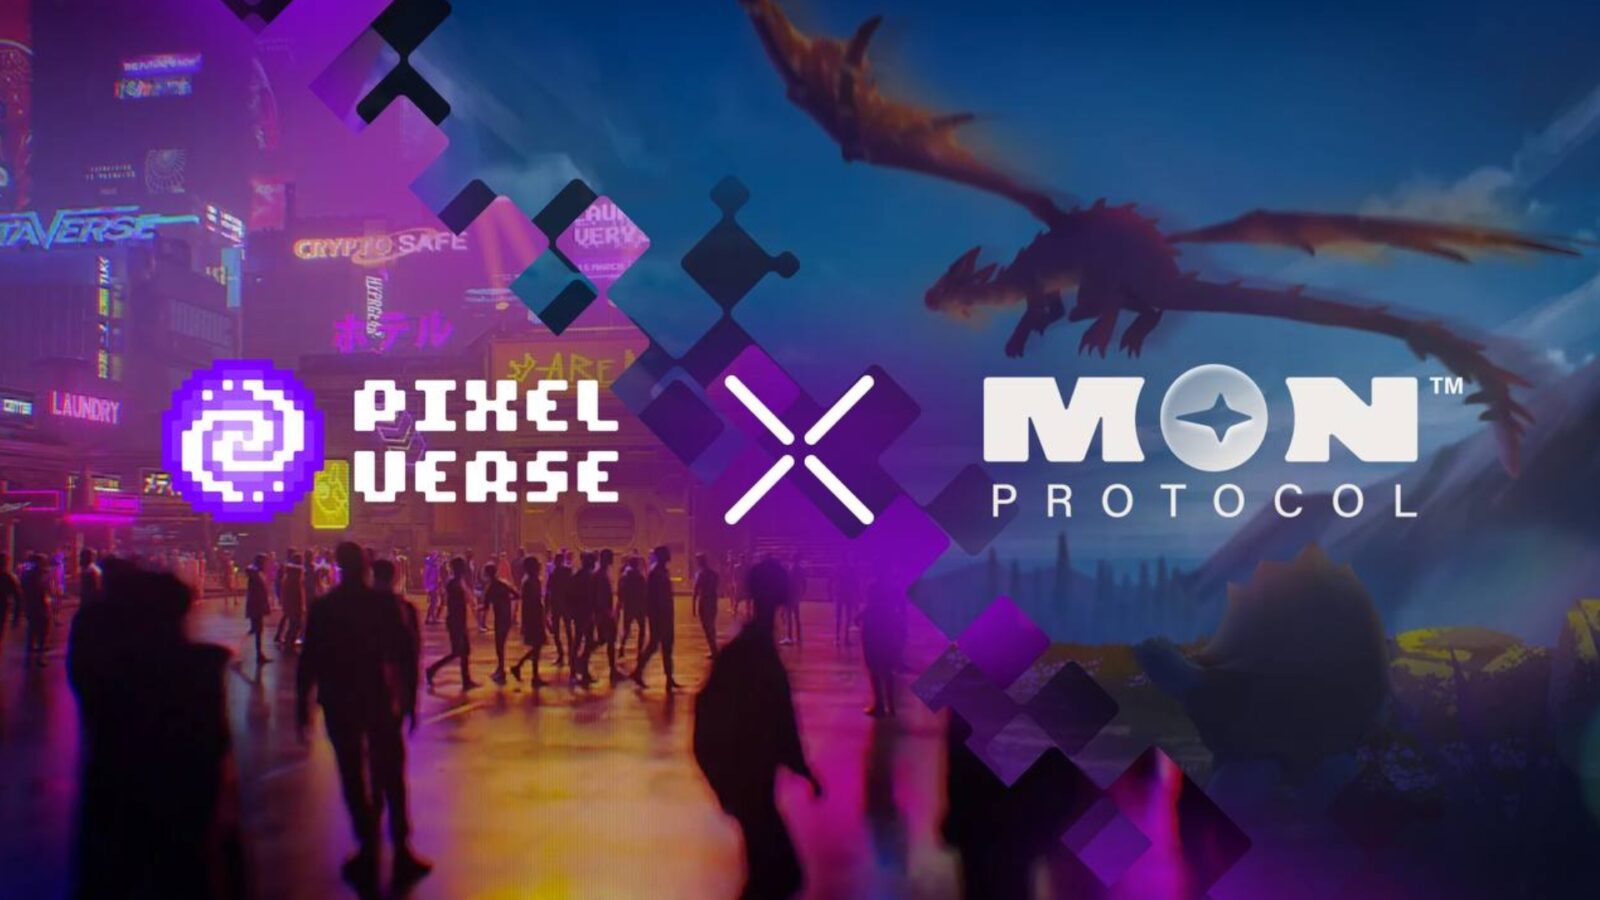 Mon Protocol Expands its Horizons Through Partnership with Pixelverse